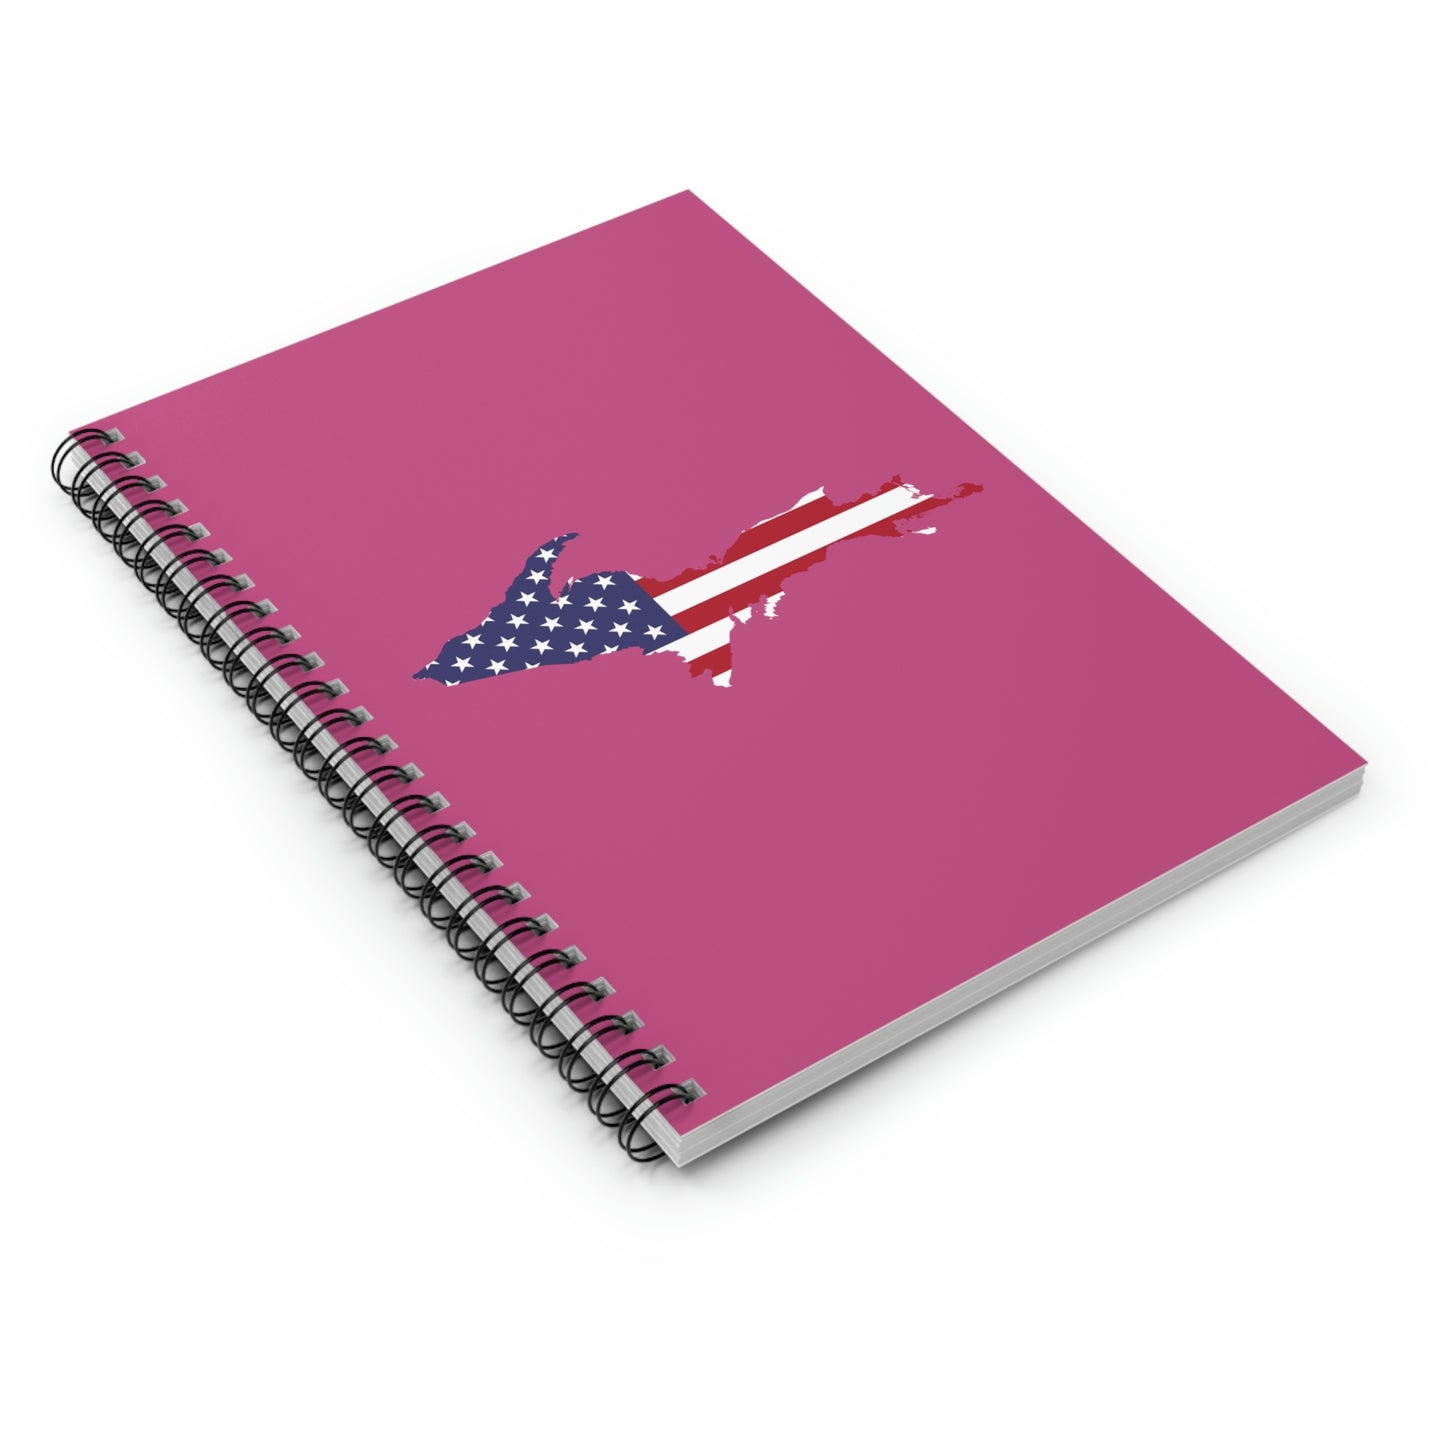 Michigan Upper Peninsula Spiral Notebook (w/ UP USA Flag Outline) | Apple Blossom Pink